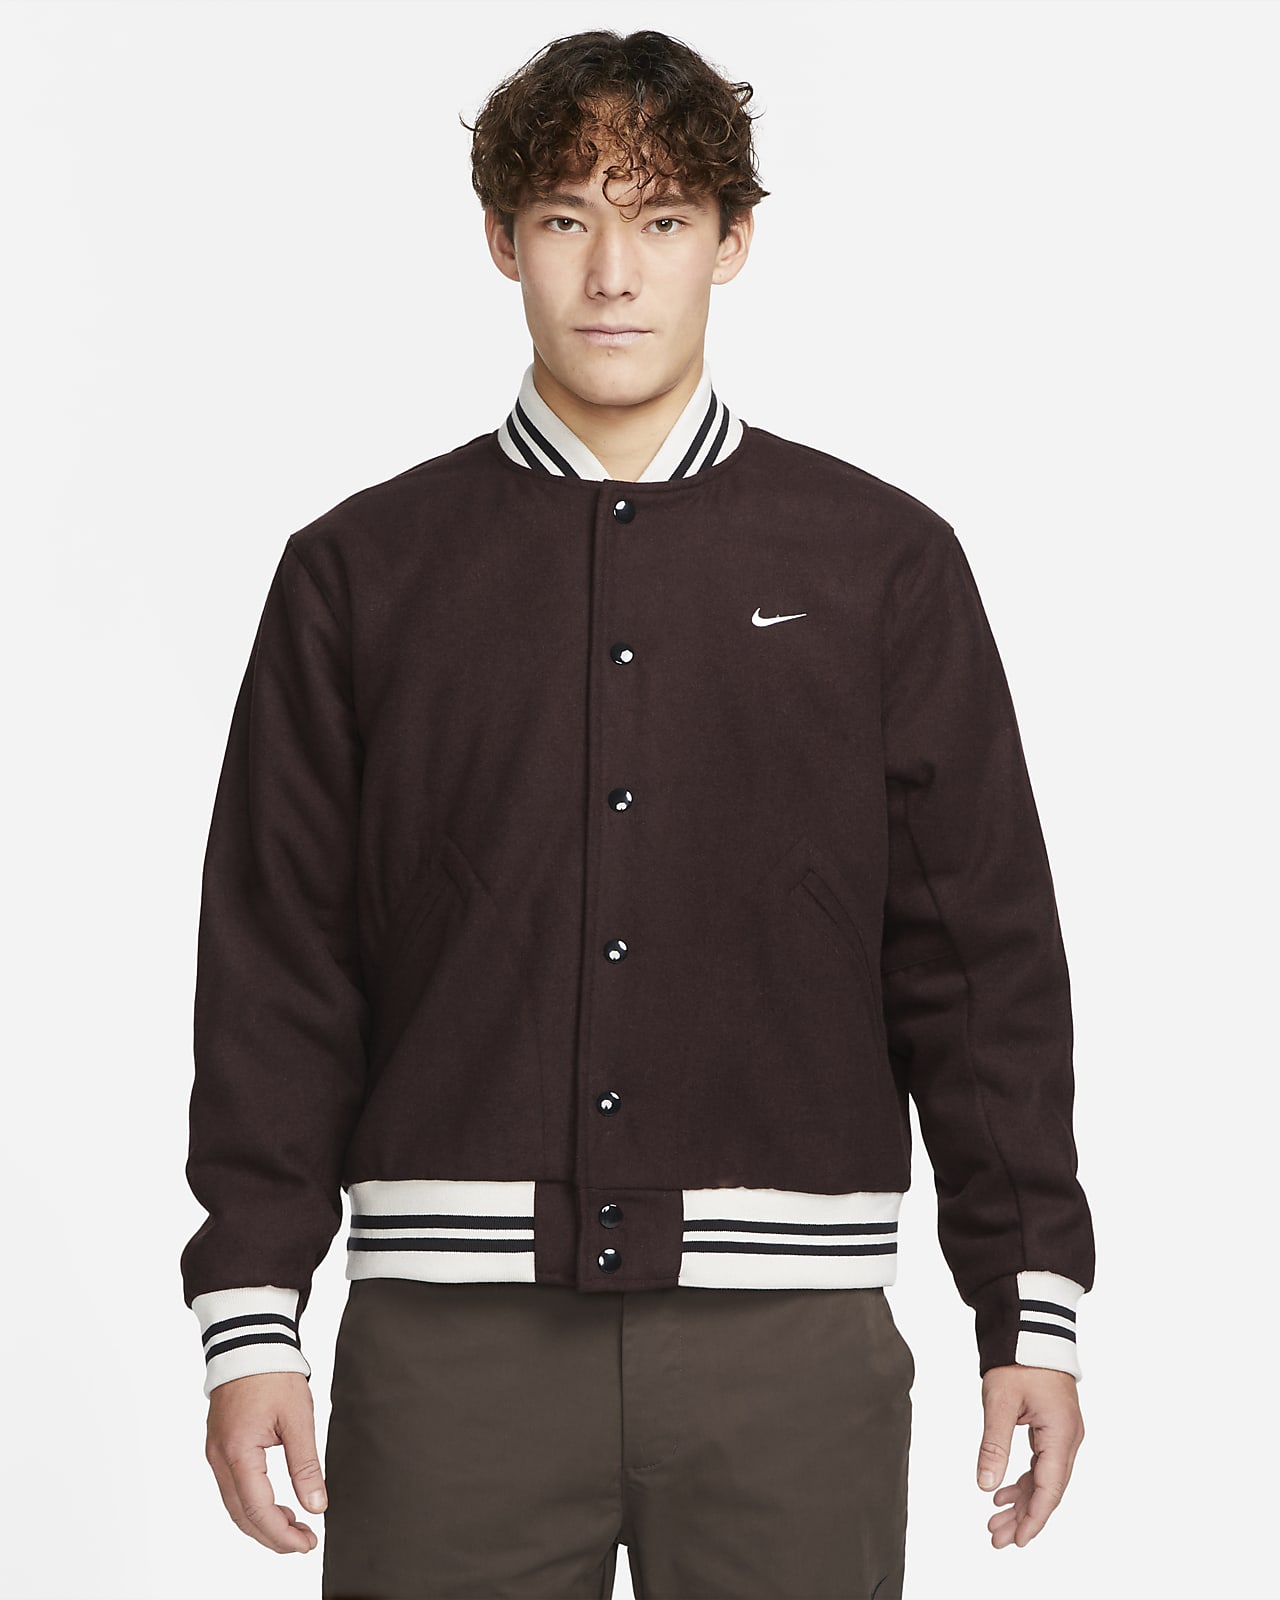 Nike Sportswear Authentics Men's Varsity Jacket. SI